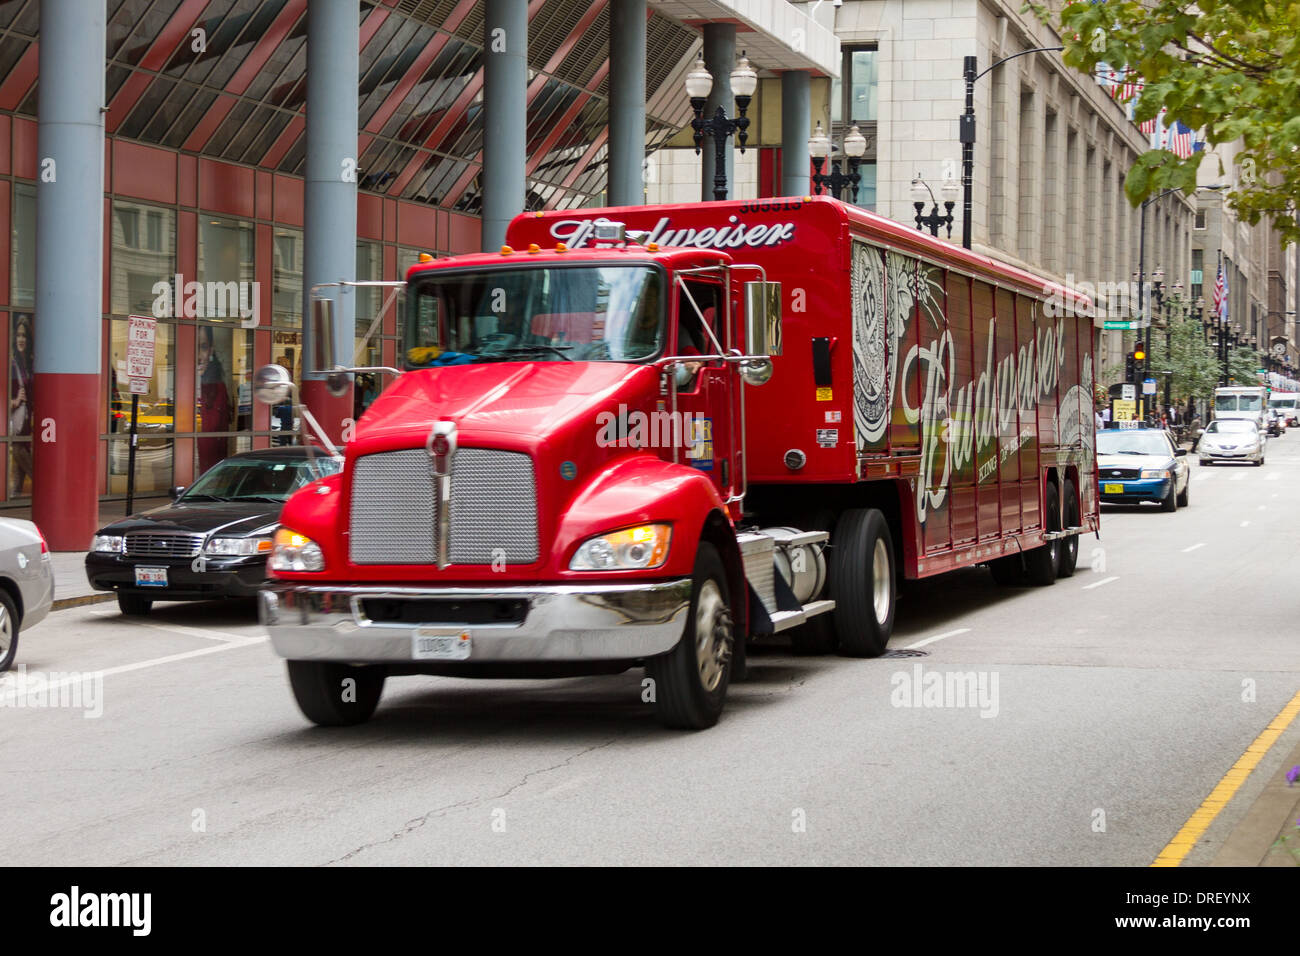 Budweiser truck in Chicago Stock Photo